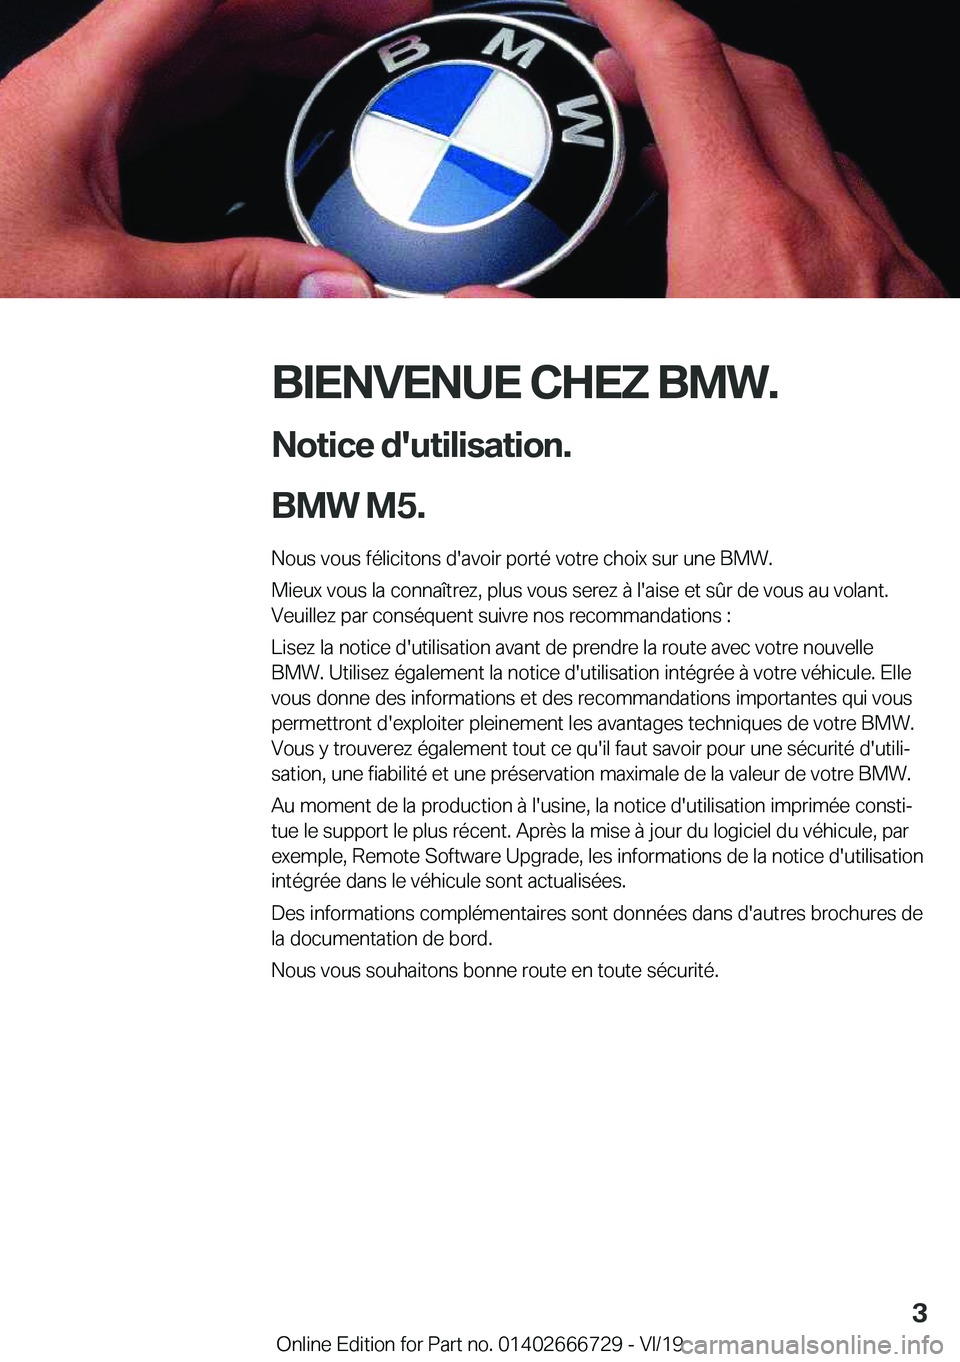 BMW M5 2020  Notices Demploi (in French) �B�I�E�N�V�E�N�U�E��C�H�E�Z��B�M�W�.�N�o�t�i�c�e��d�'�u�t�i�l�i�s�a�t�i�o�n�.
�B�M�W��M�5�. �N�o�u�s��v�o�u�s��f�é�l�i�c�i�t�o�n�s��d�'�a�v�o�i�r��p�o�r�t�é��v�o�t�r�e��c�h�o�i�x�